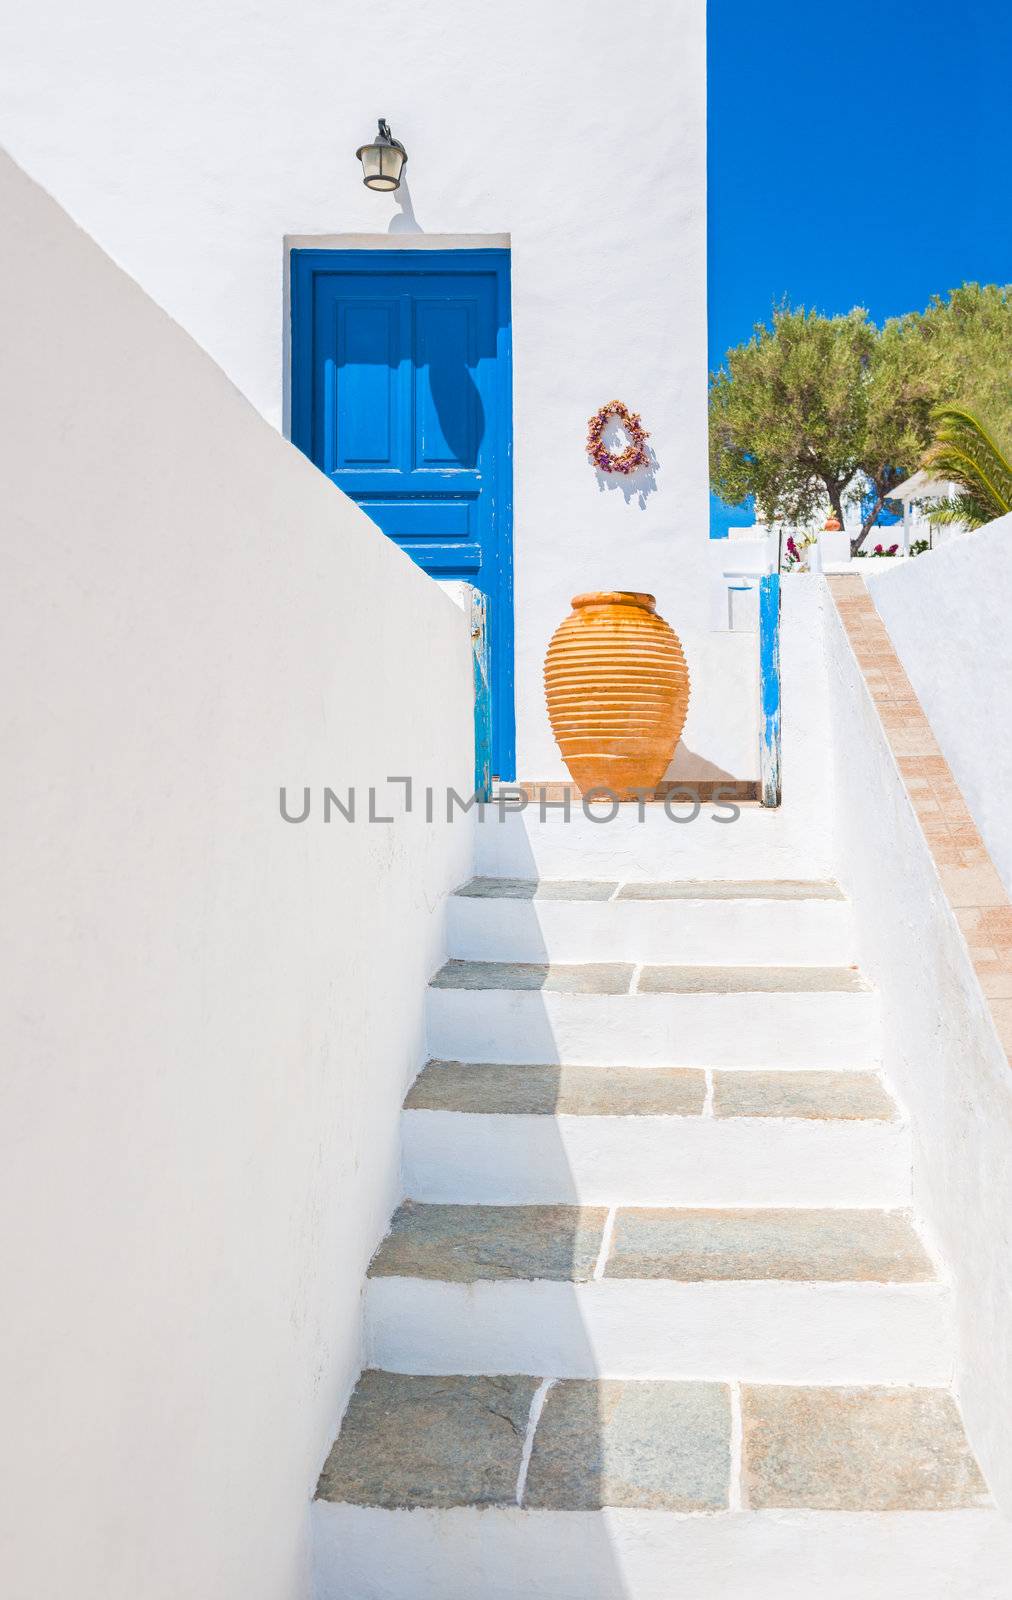 Staircase and ceramic vase near blue door, Sifnos, Greece by akarelias